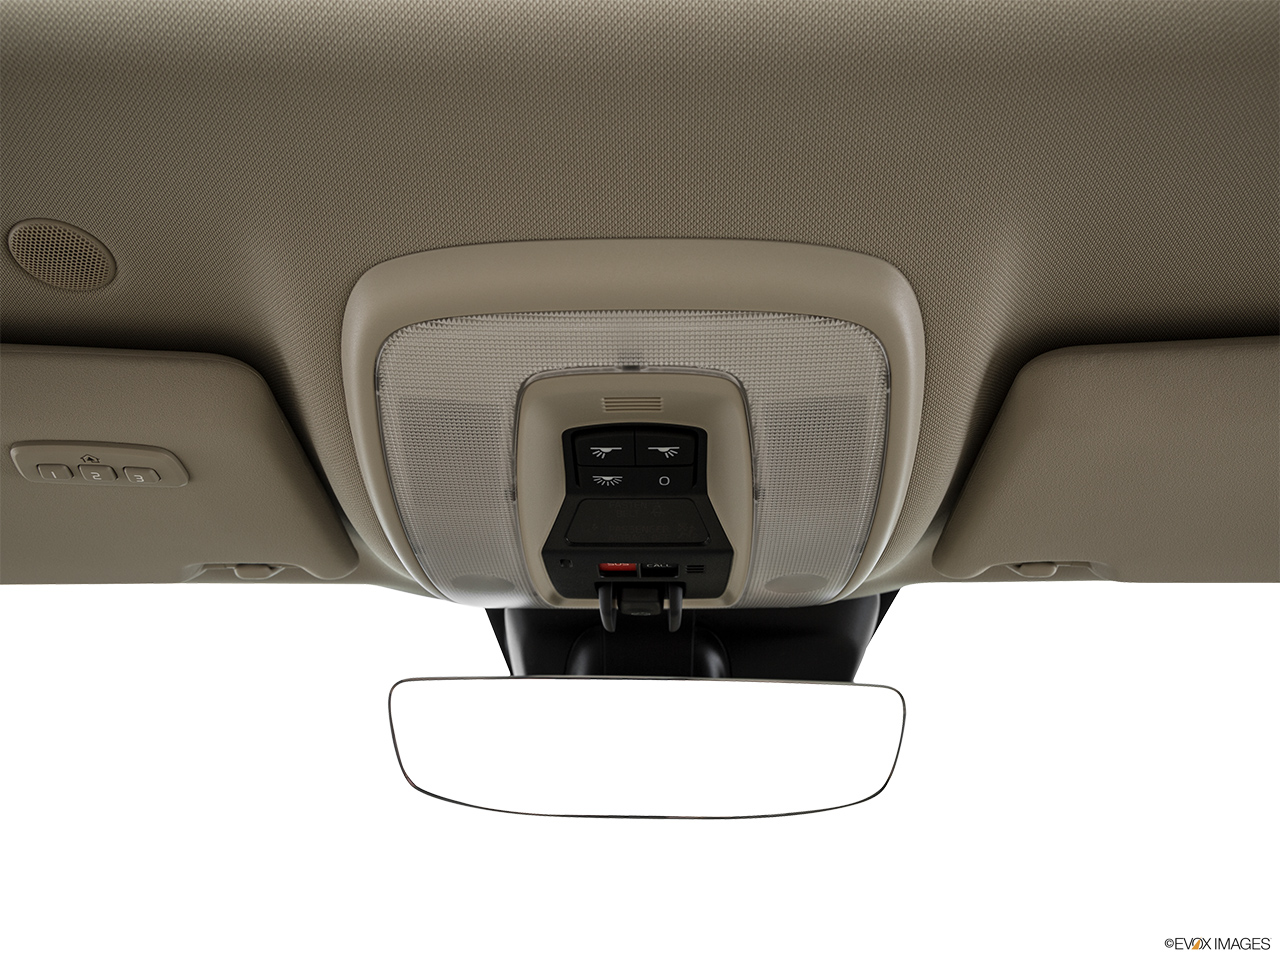 2016 Volvo XC60 T5 Drive-E FWD Premier Courtesy lamps/ceiling controls. 